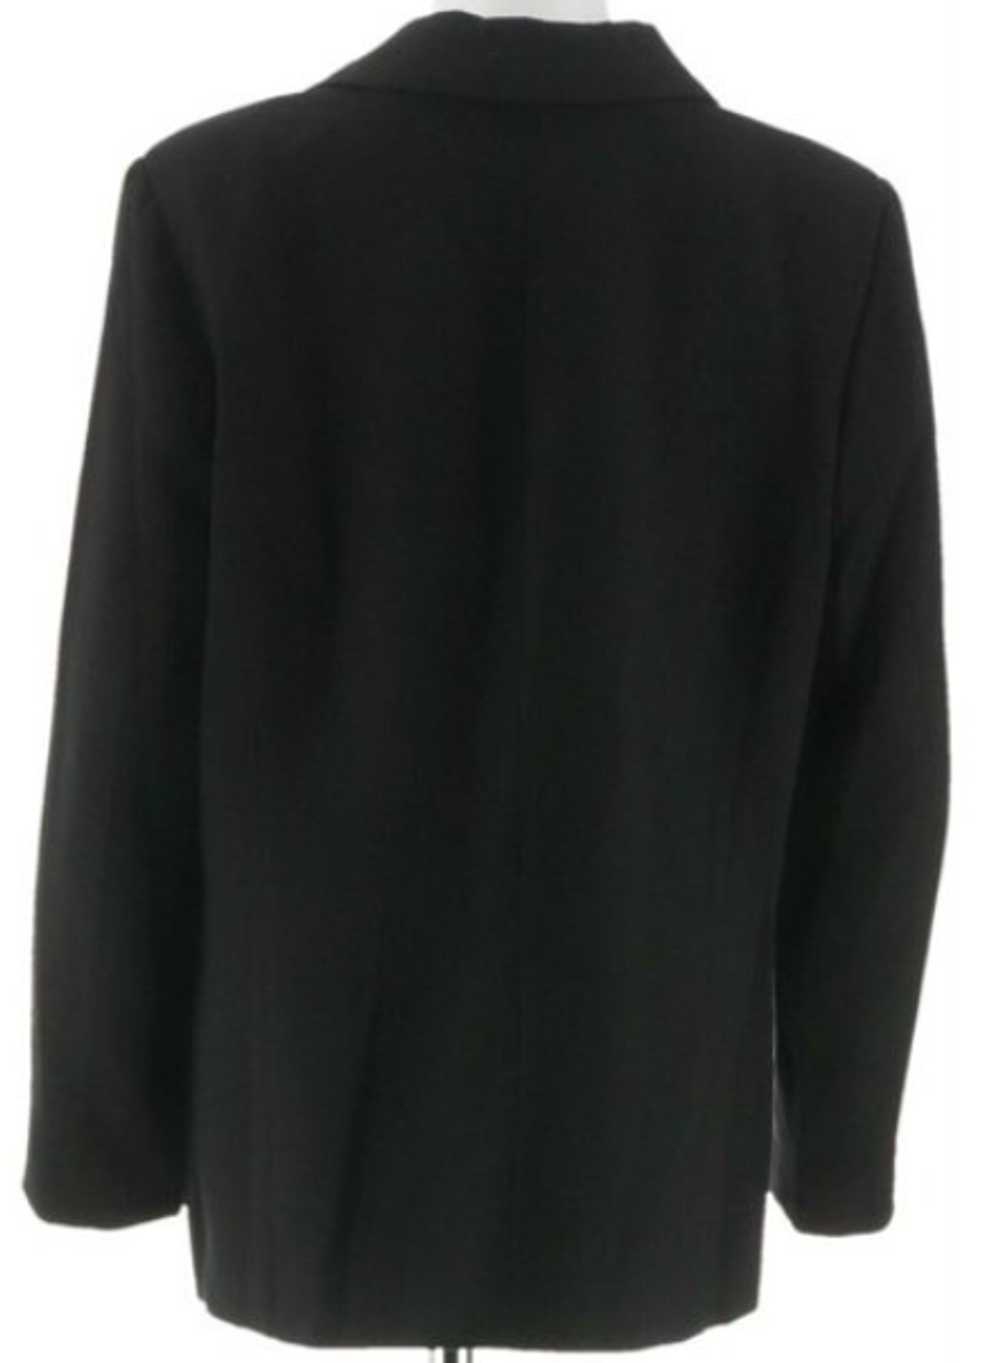 Linea by Louis Dell'Olio Tuxedo Jacket Black - image 4